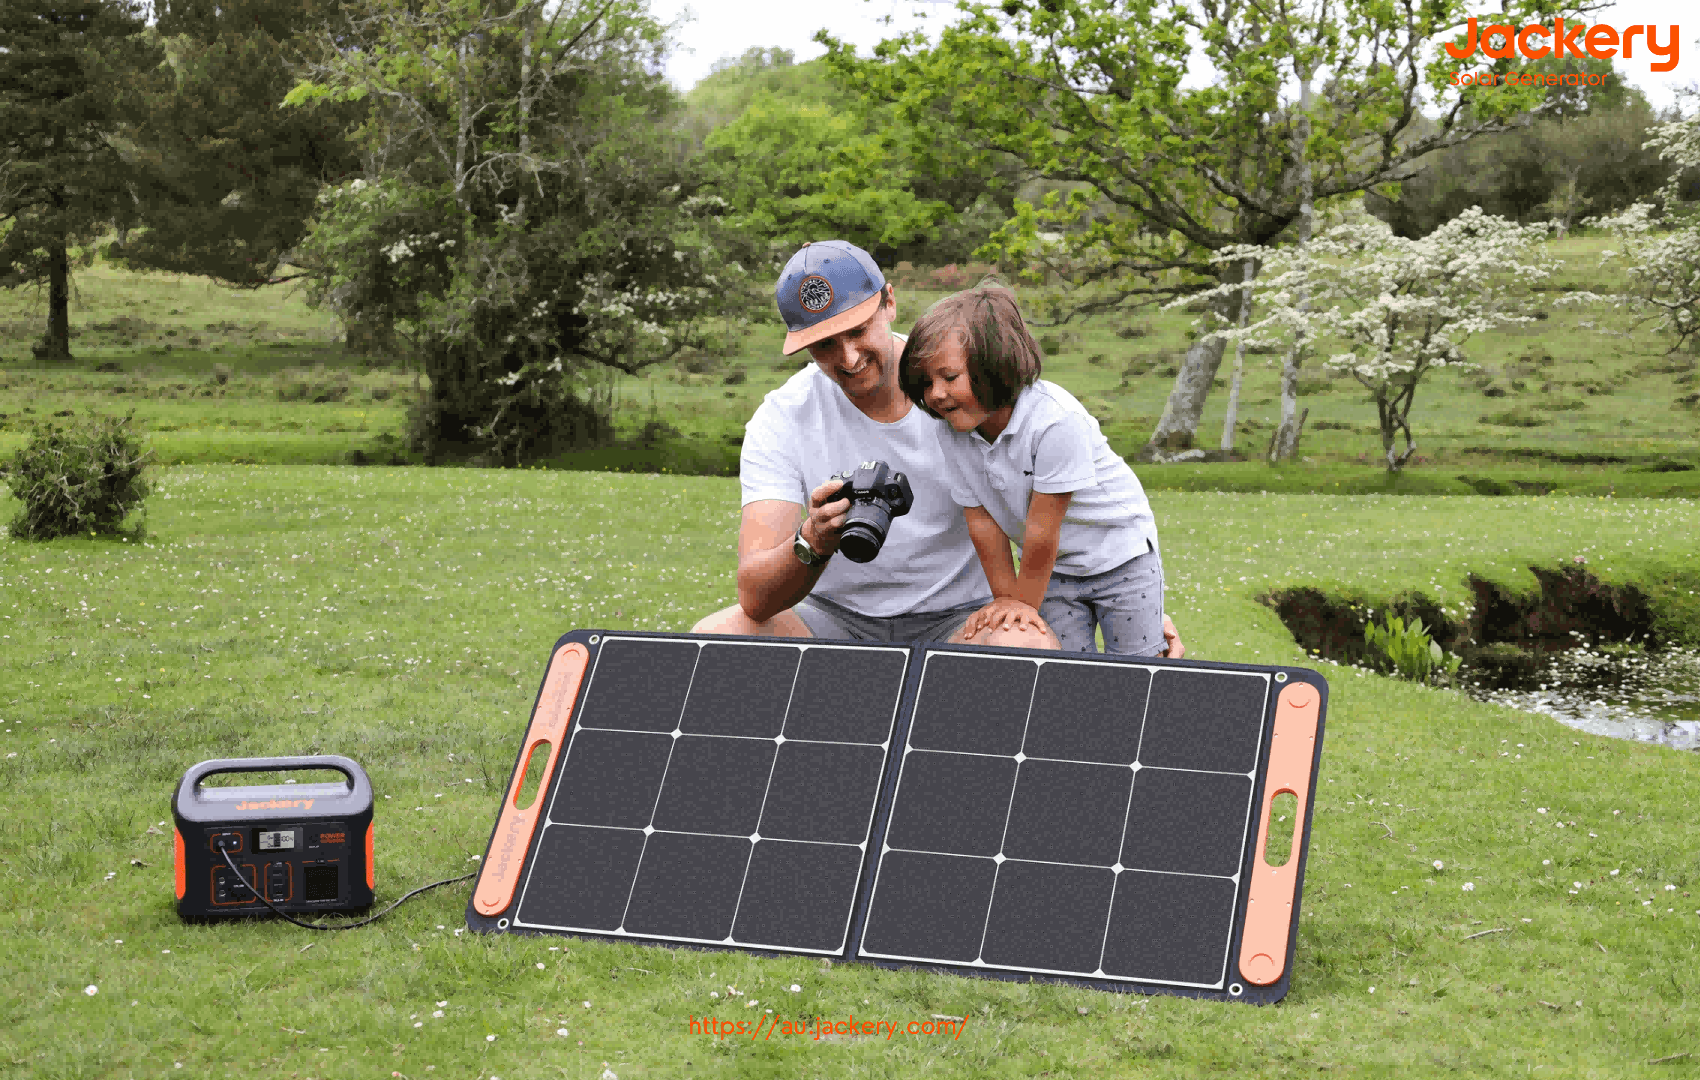 jackery solar generator for picnics